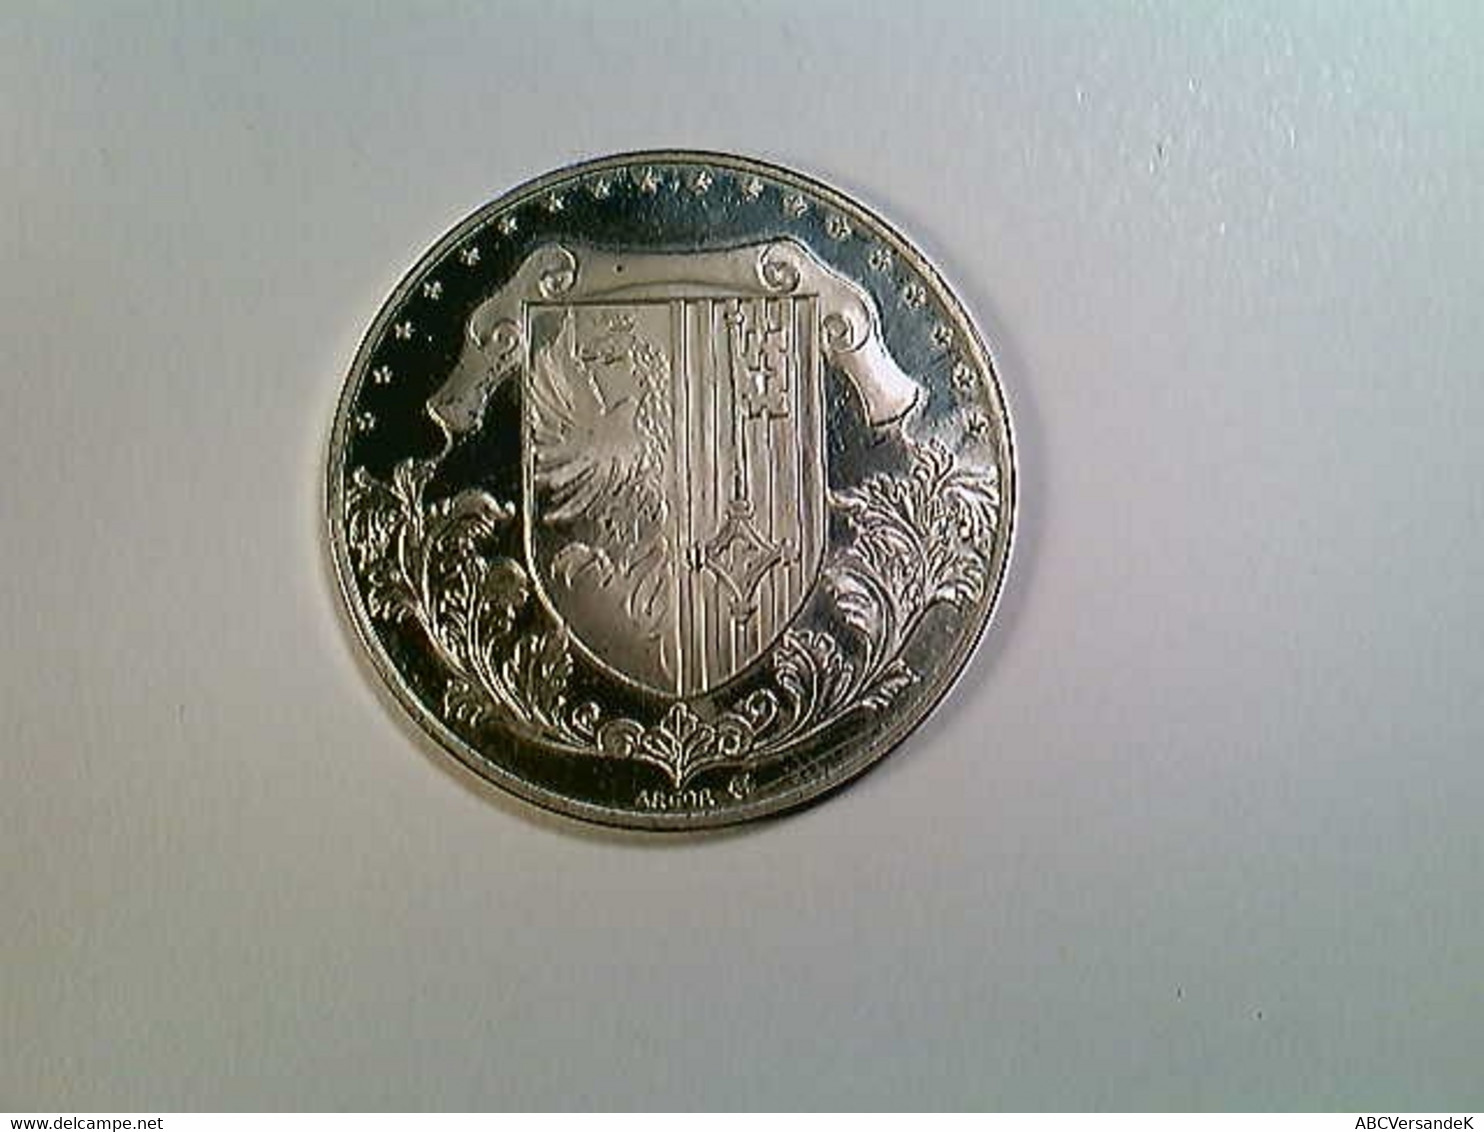 Münze Republica Geneva 1814-1964, Schweiz Kantonalmünze, Argor, Silber, SELTEN! - Numismatiek